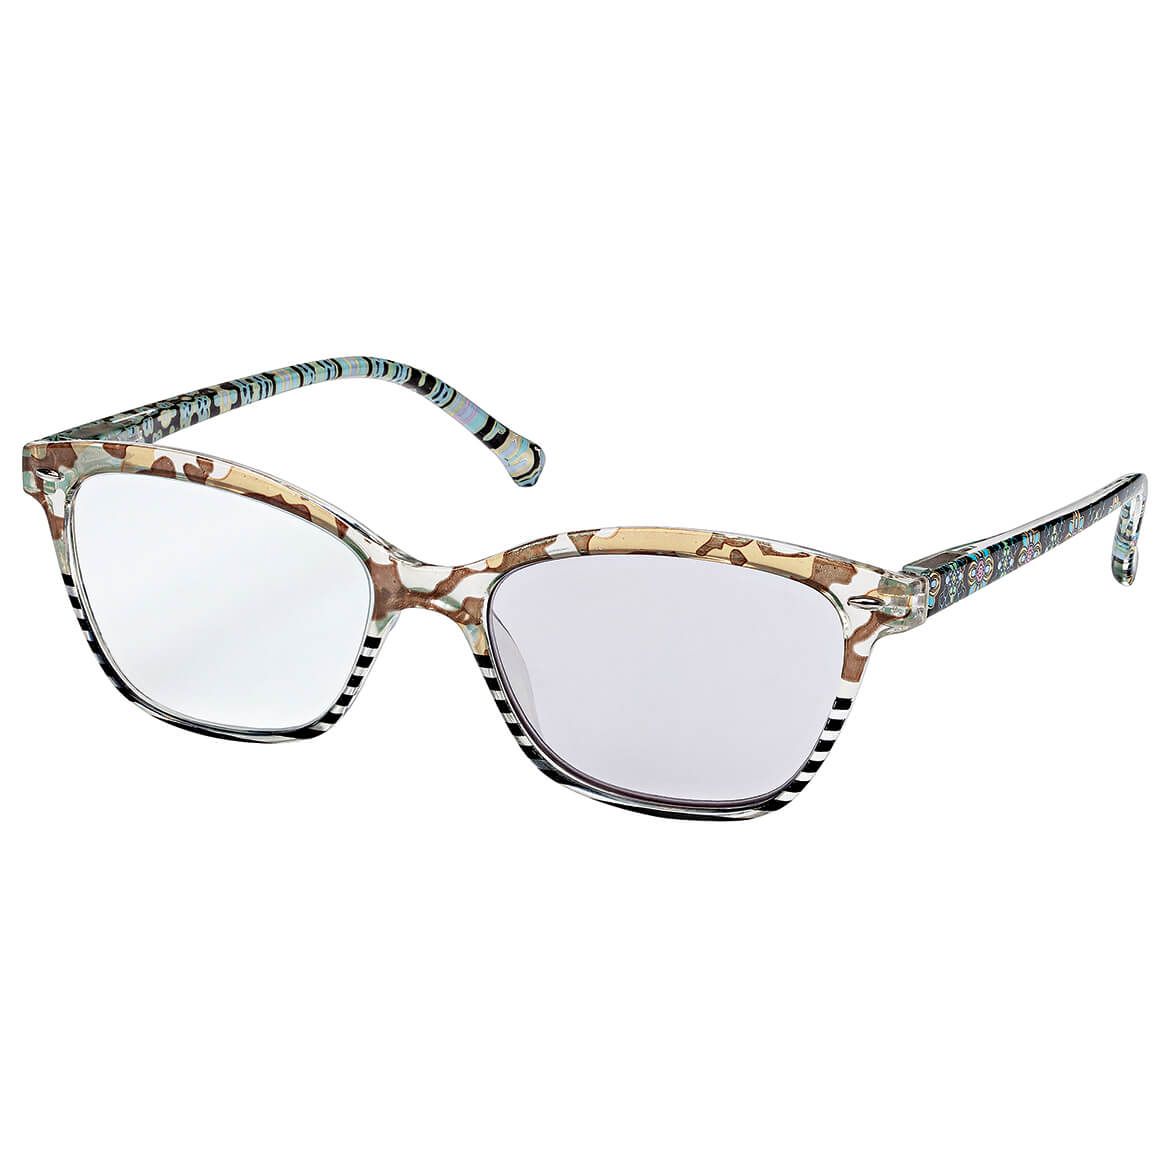 Women's Photochromatic Reading Glasses + '-' + 376967